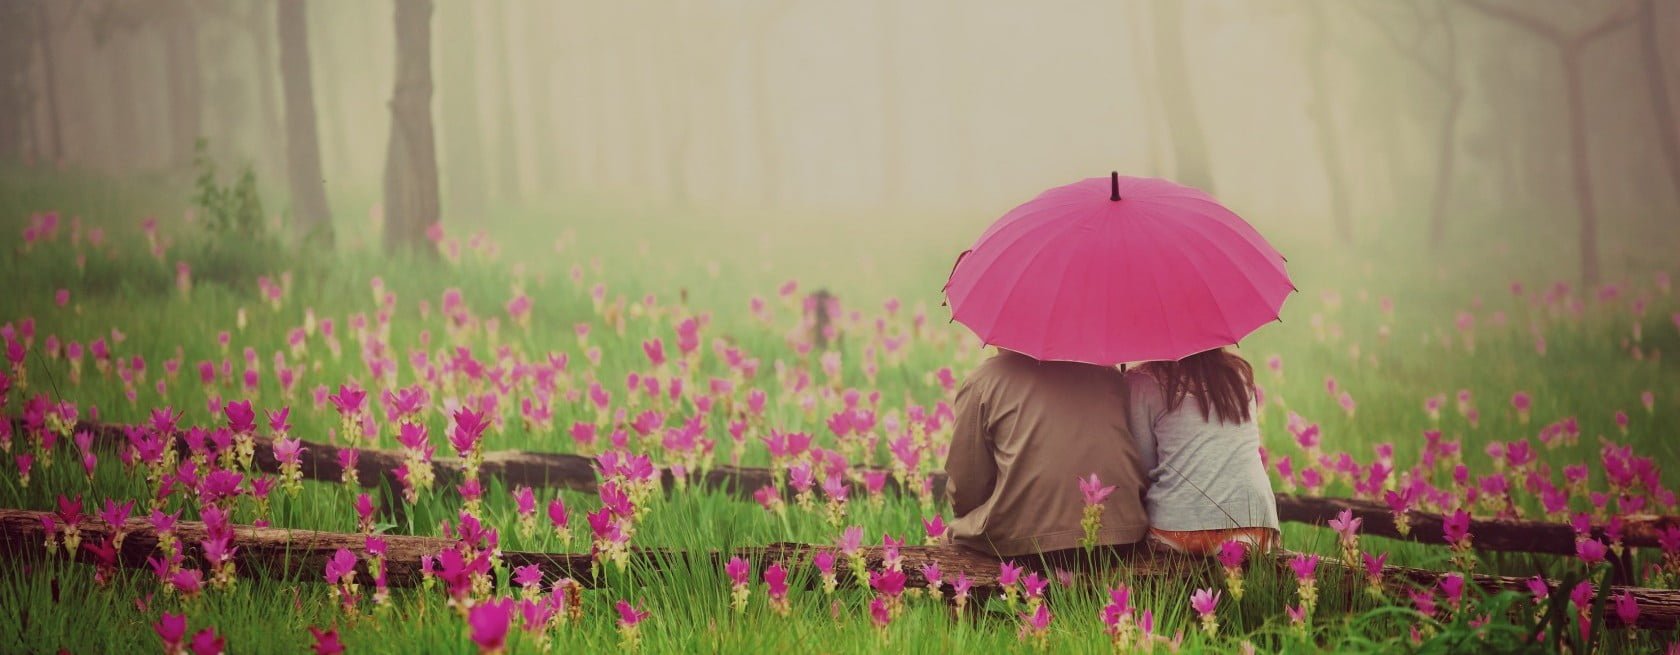 love couple with pink umbrella e1437978137522 20 عادة سيئة يمكن أن تؤذي علاقتك بمن تحب مجلة نقطة العلمية